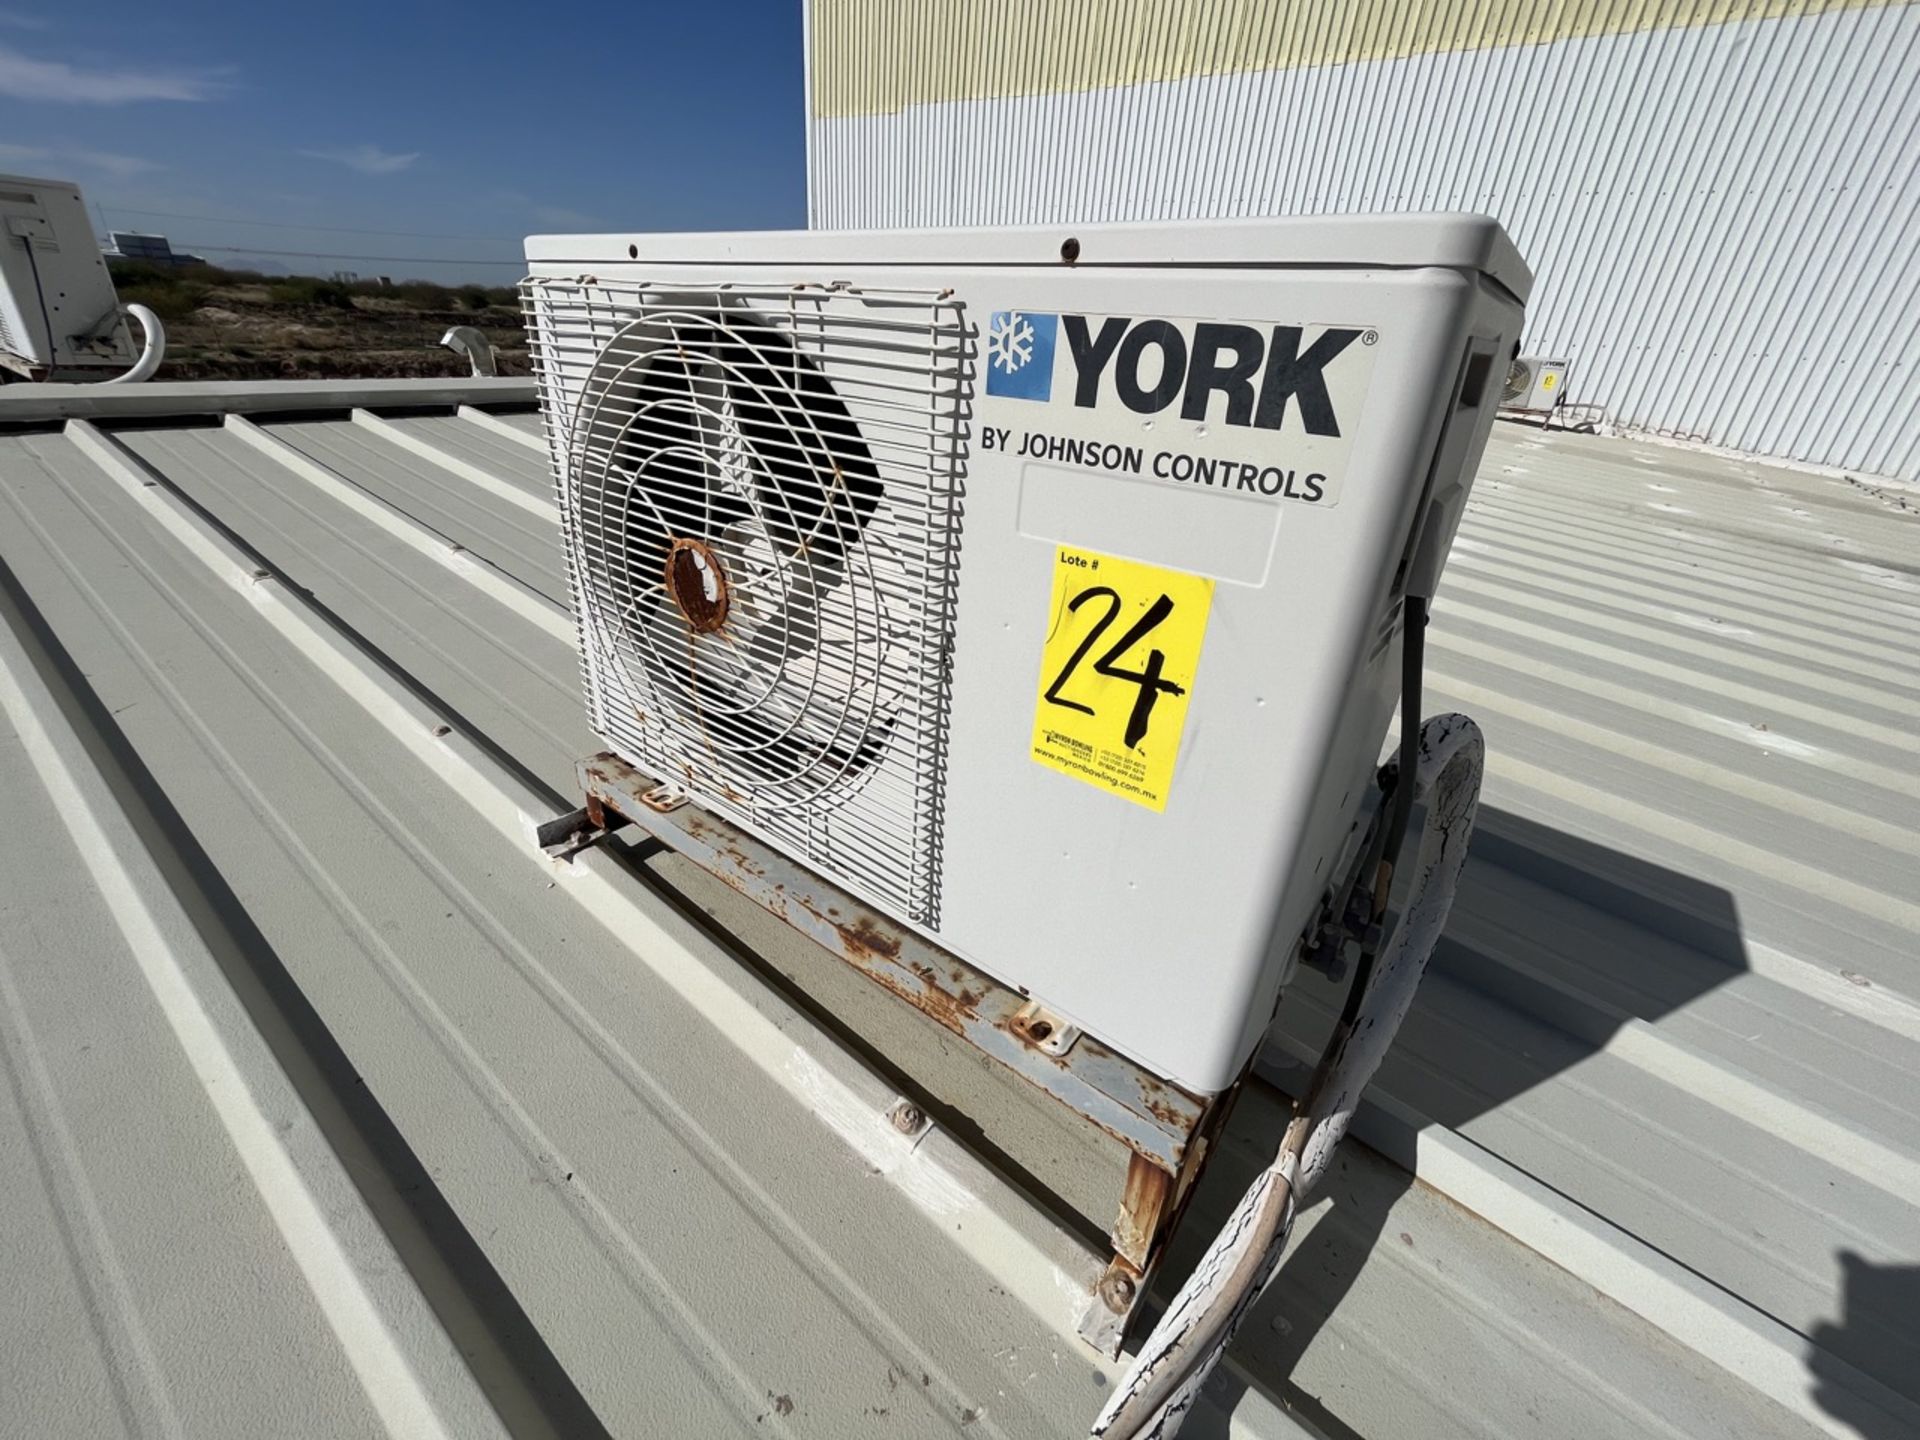 York minisplit air conditioner with control, Model YSEA12FS-ADK, 100001010140290127, Series, 220 Vo - Image 4 of 7